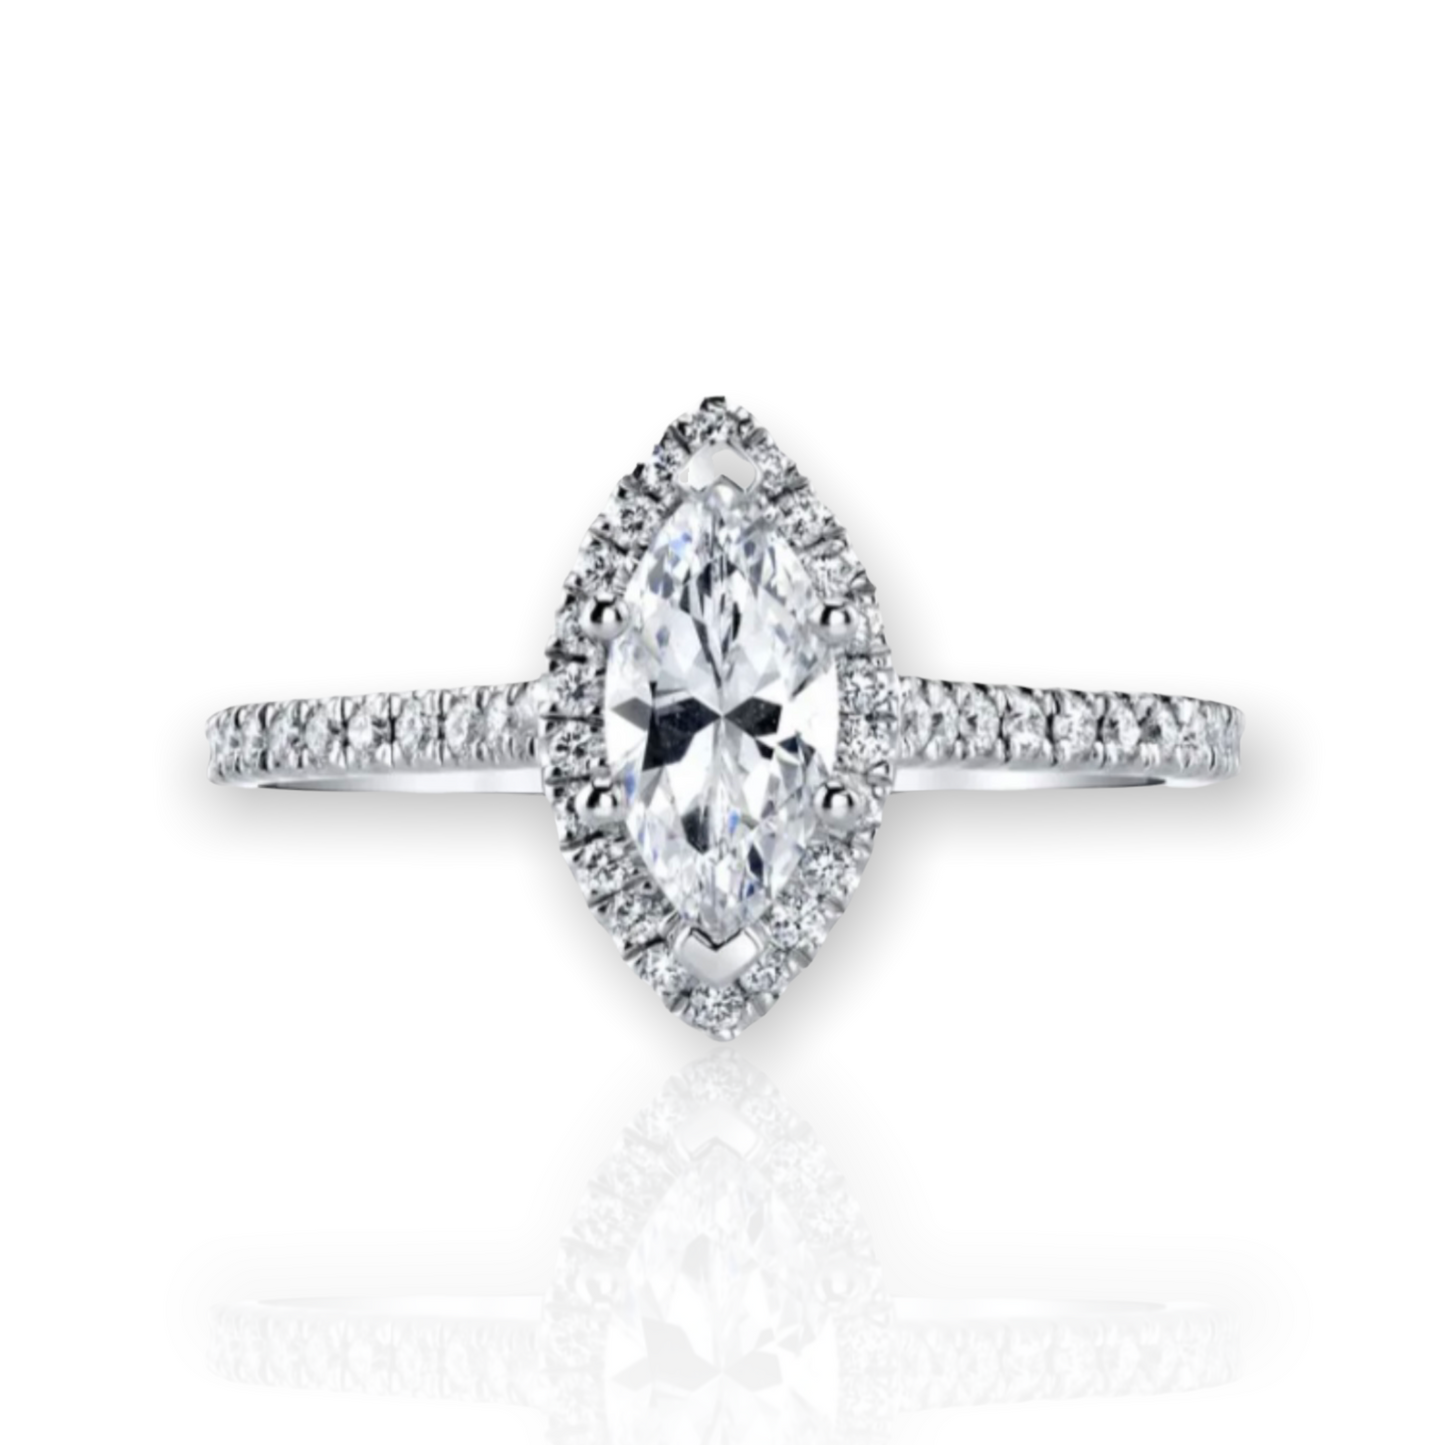 Marquise Halo Diamond Engagement Ring